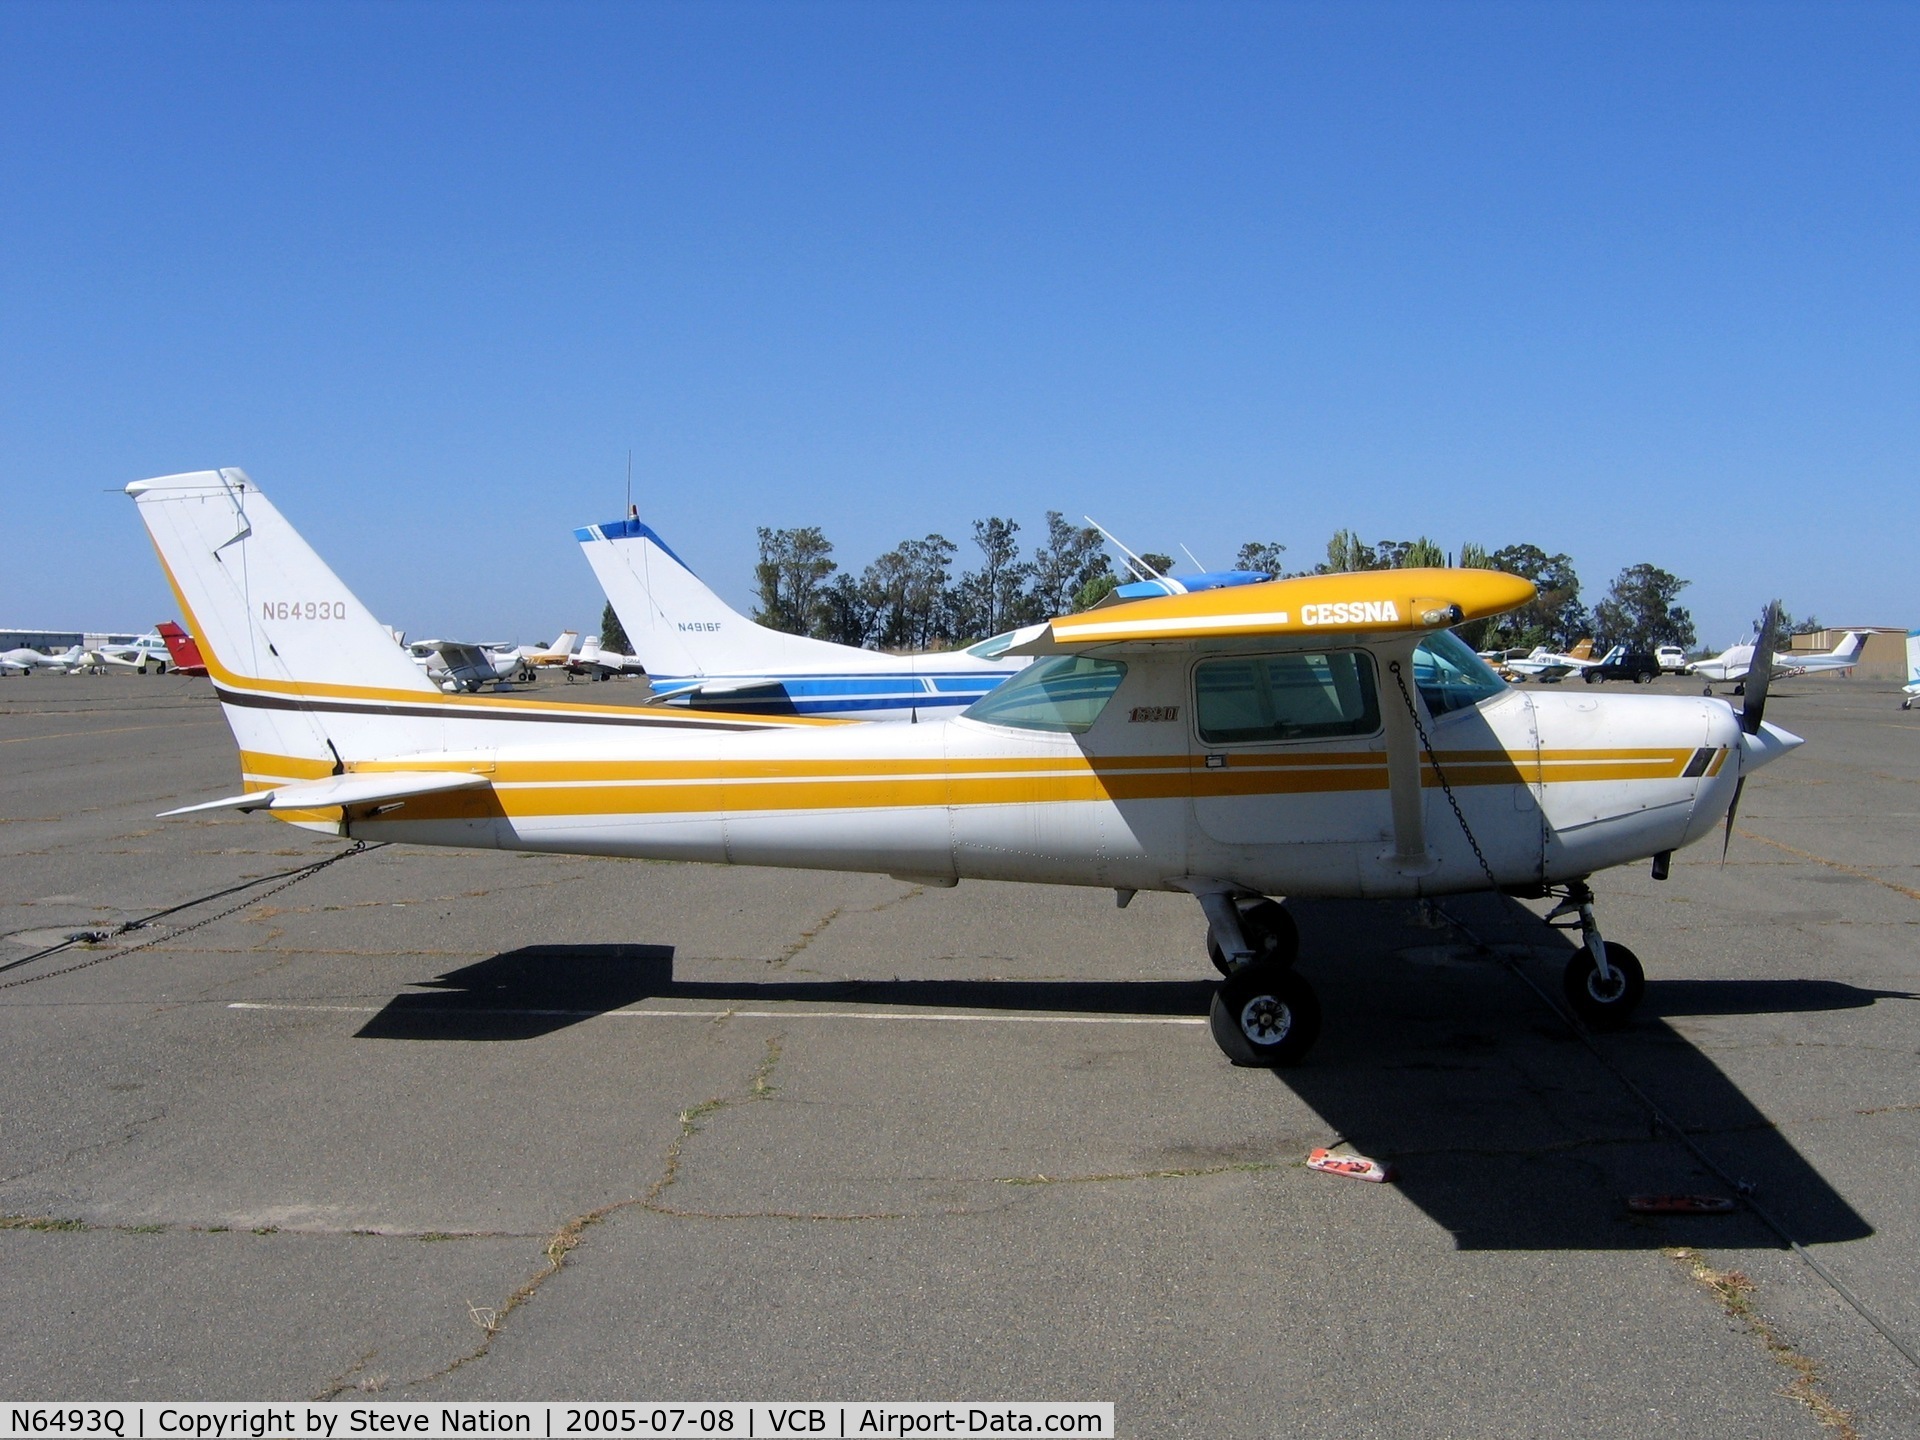 N6493Q, 1981 Cessna 152 C/N 15285262, Blue Skies Associates, Inc. (Carson City, NV) 1981 Cessna 152 at Nut Tree Airport, Vacaville, CA